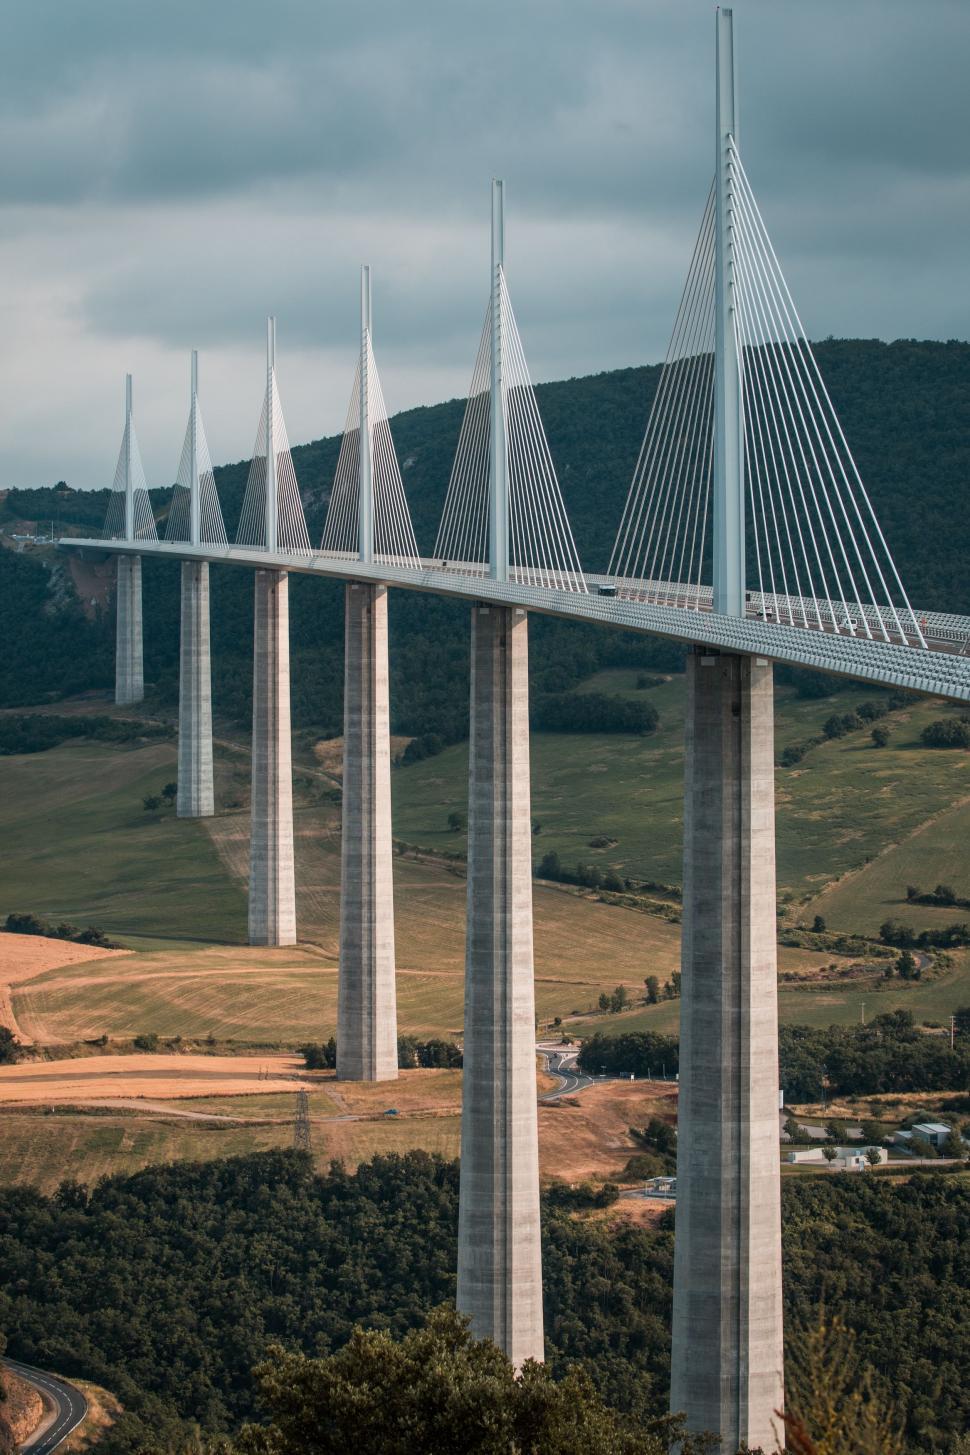 Free Image of Massive Bridge Over Valley 